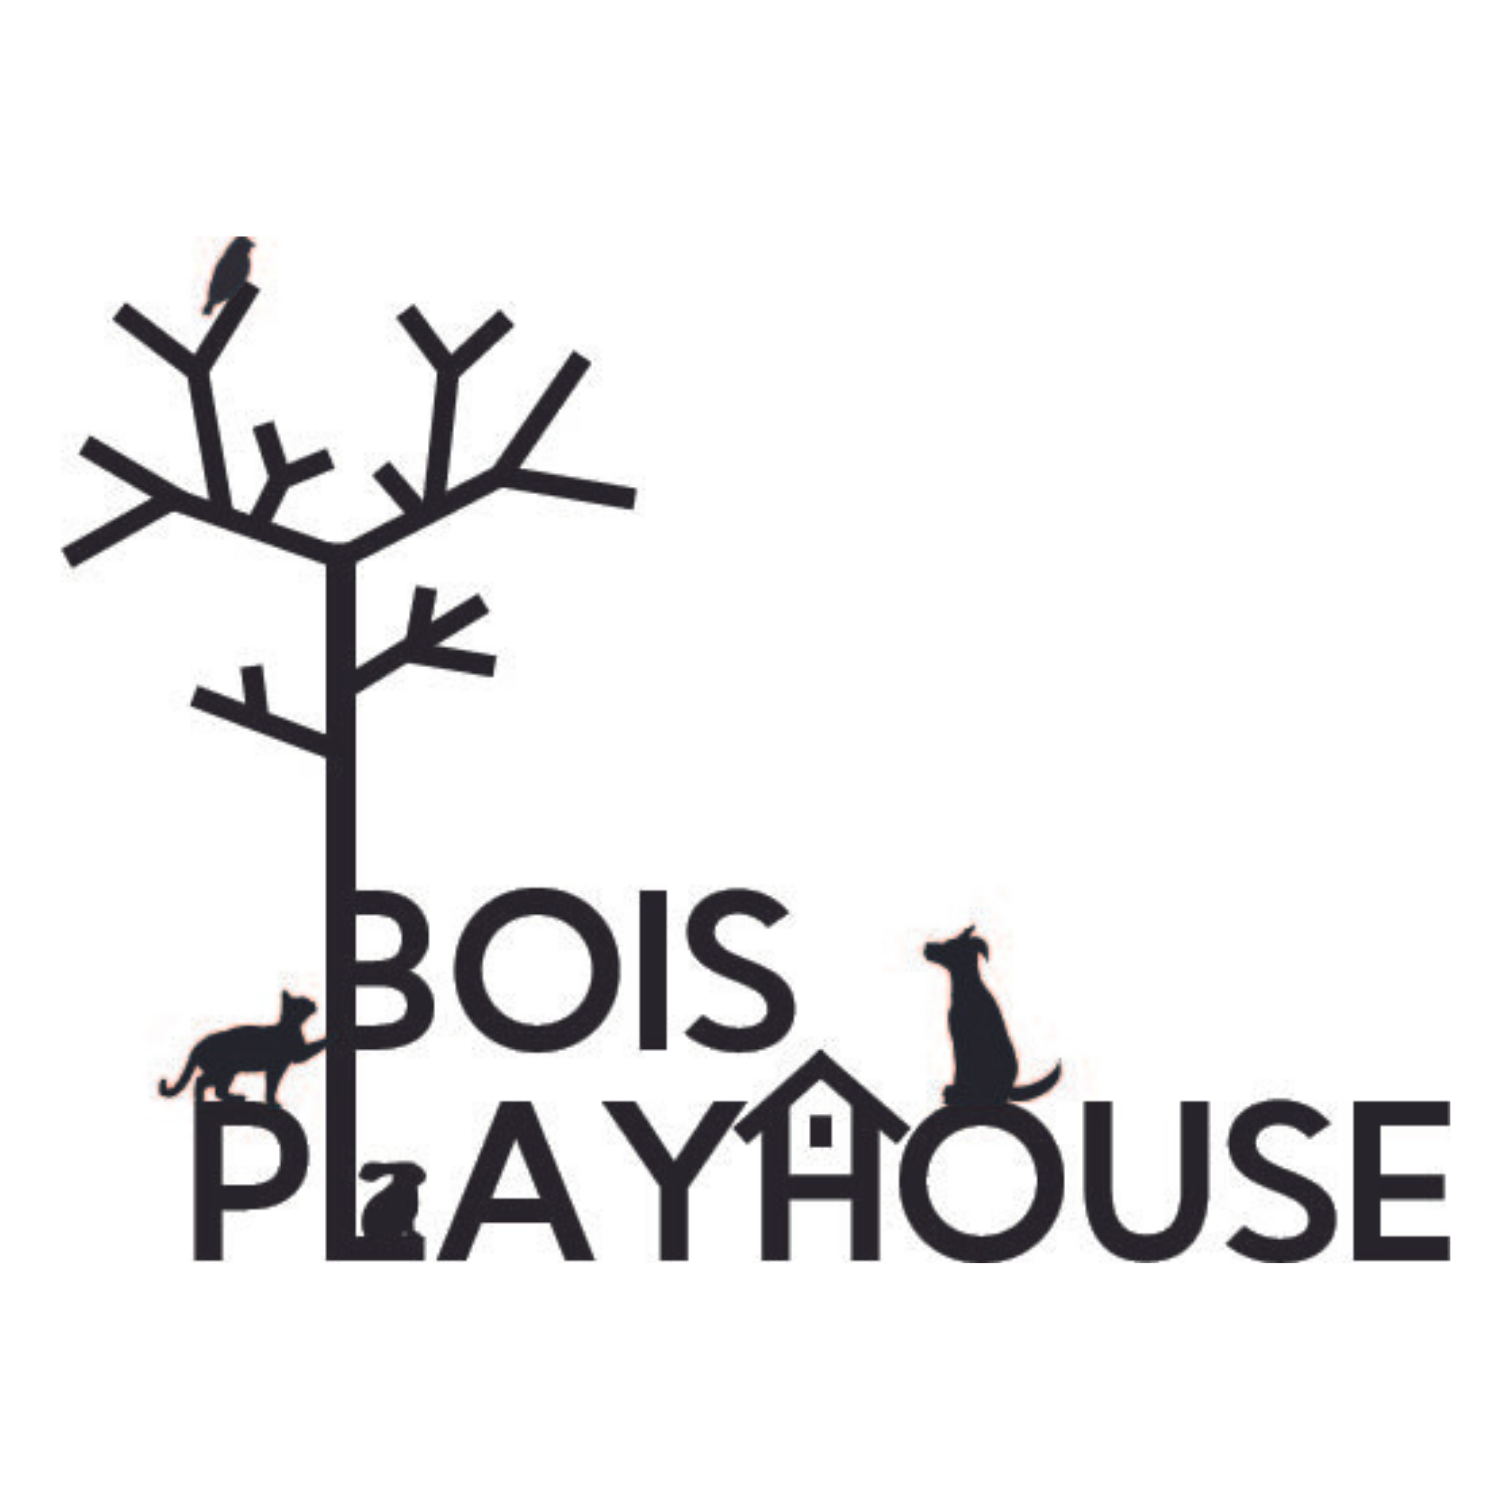 Bois Playhouse